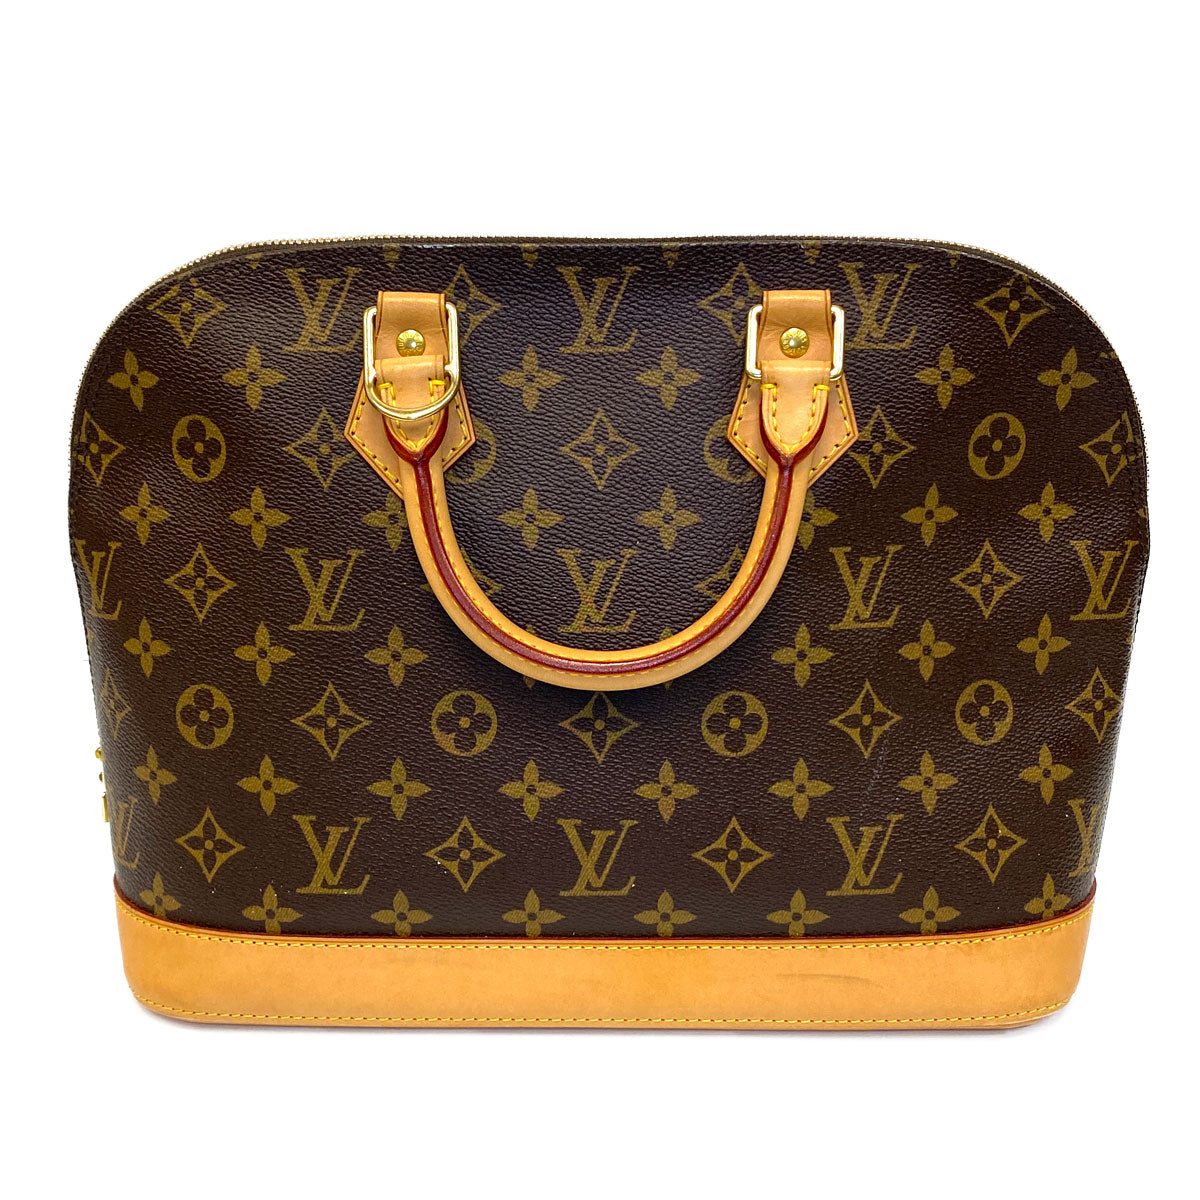 LOUIS VUITTON ALMA MM MONOGRAM BRAND GREAT ICONIC BAG. NEW CONDITION $1290.  #lv #lvalmamm #lvmonogram #designerhandbags…